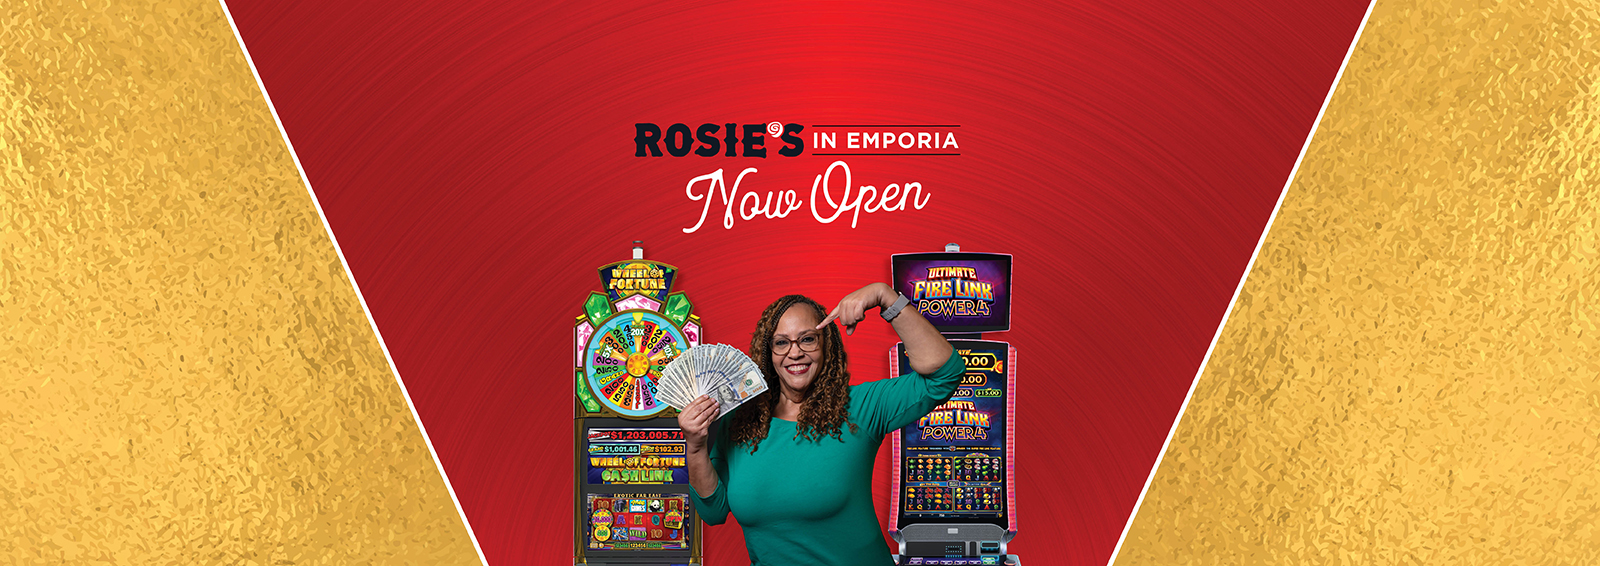 Rosie's in Emporia Now Open